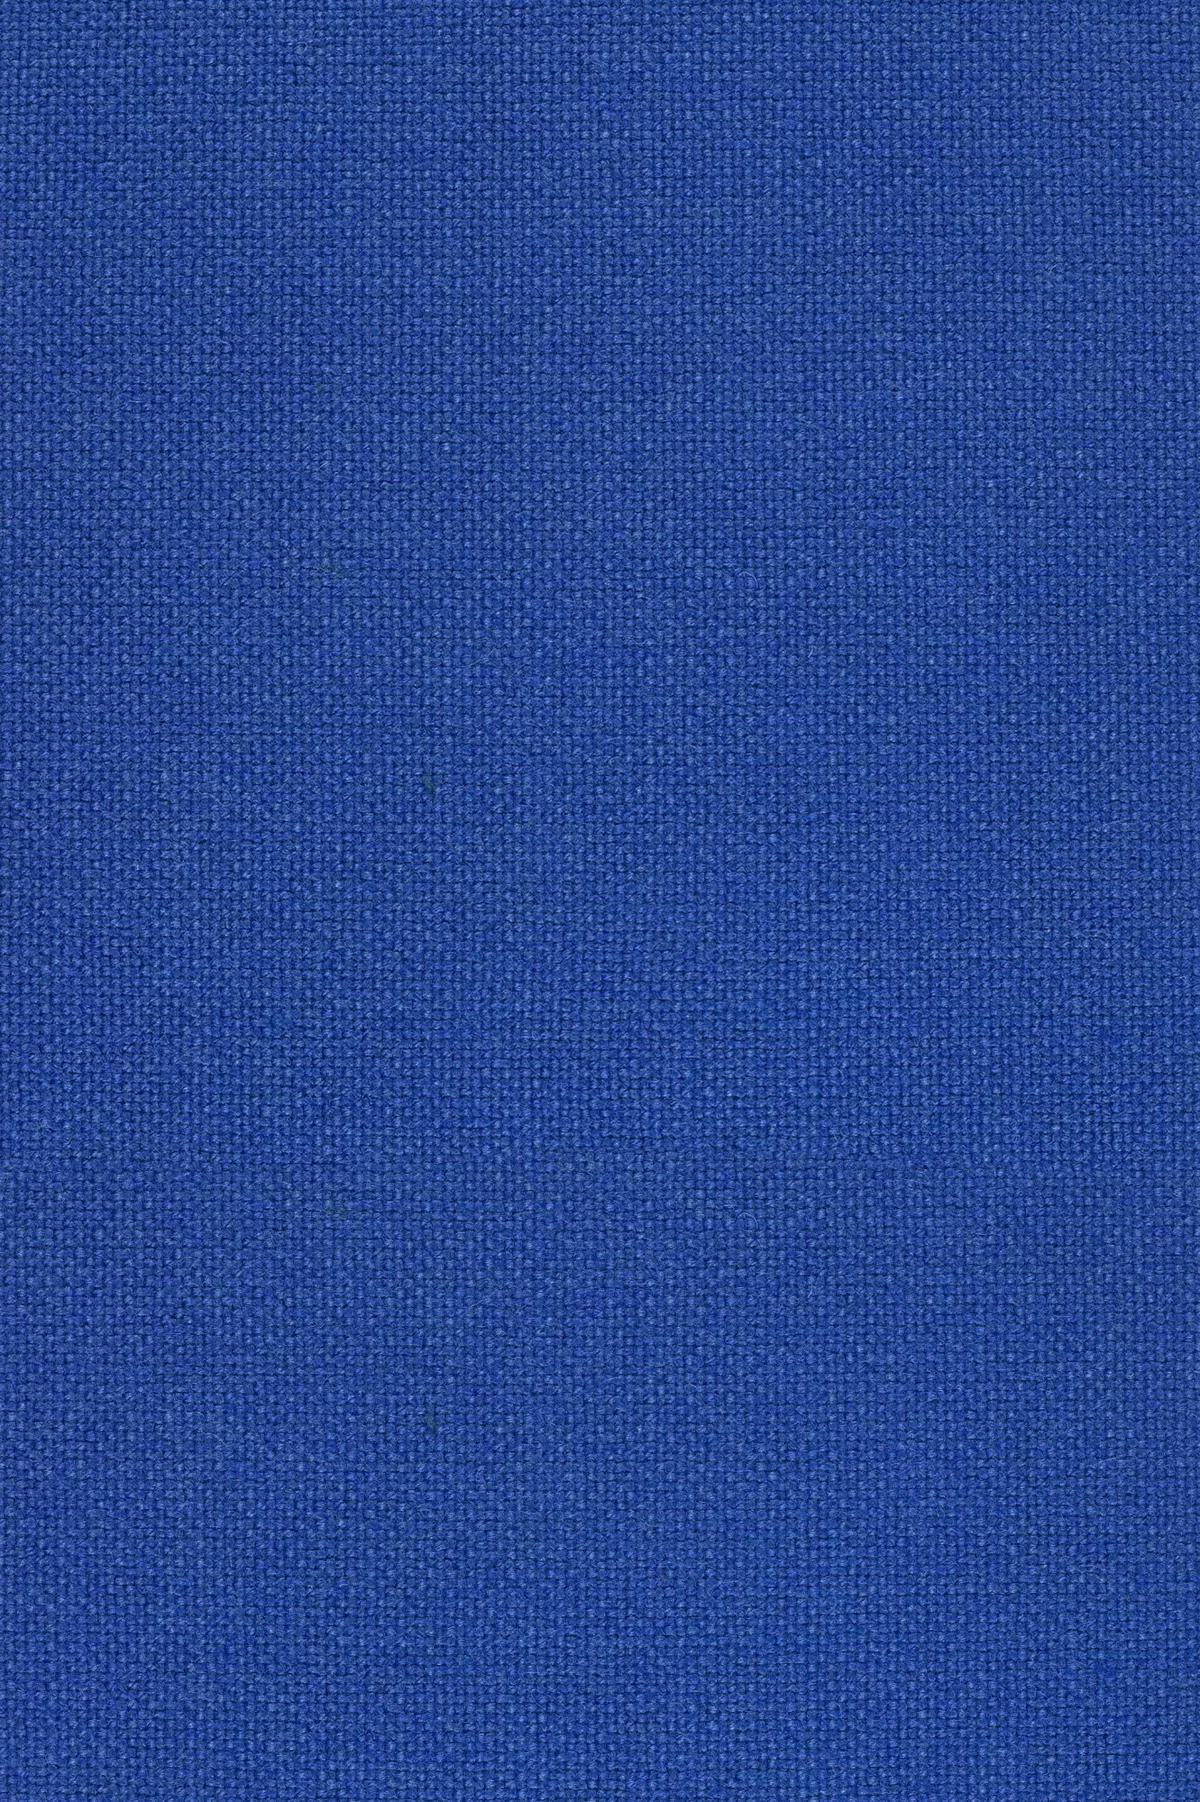 Fabric sample Hallingdal 65 750 blue